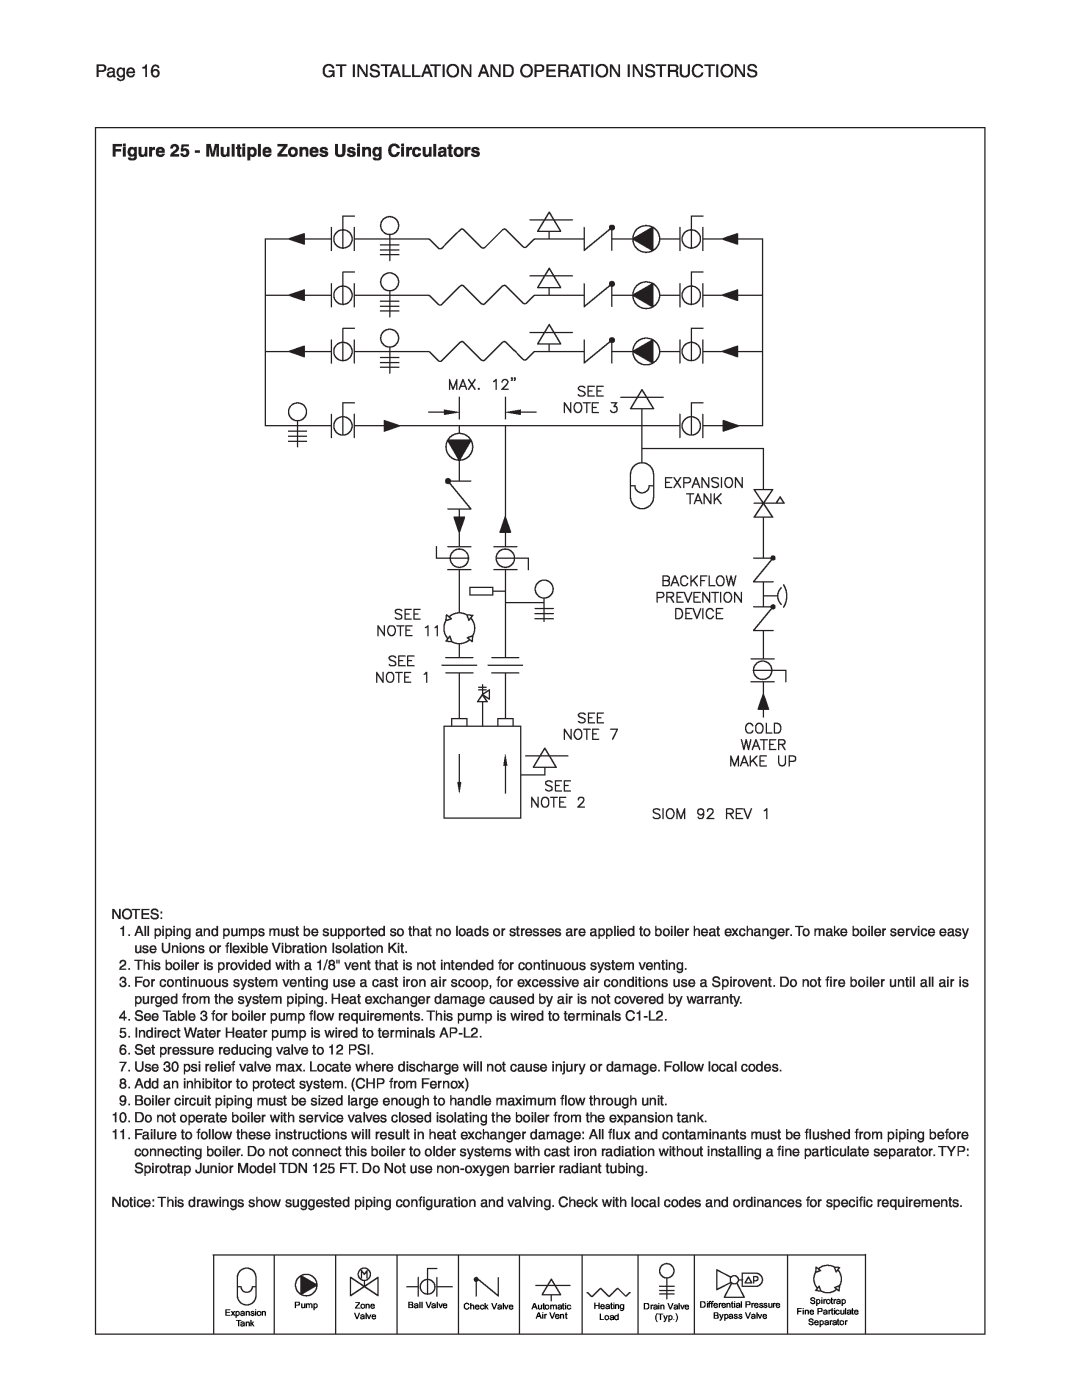 Smith Cast Iron Boilers GT Series manual Multiple Zones Using Circulators 